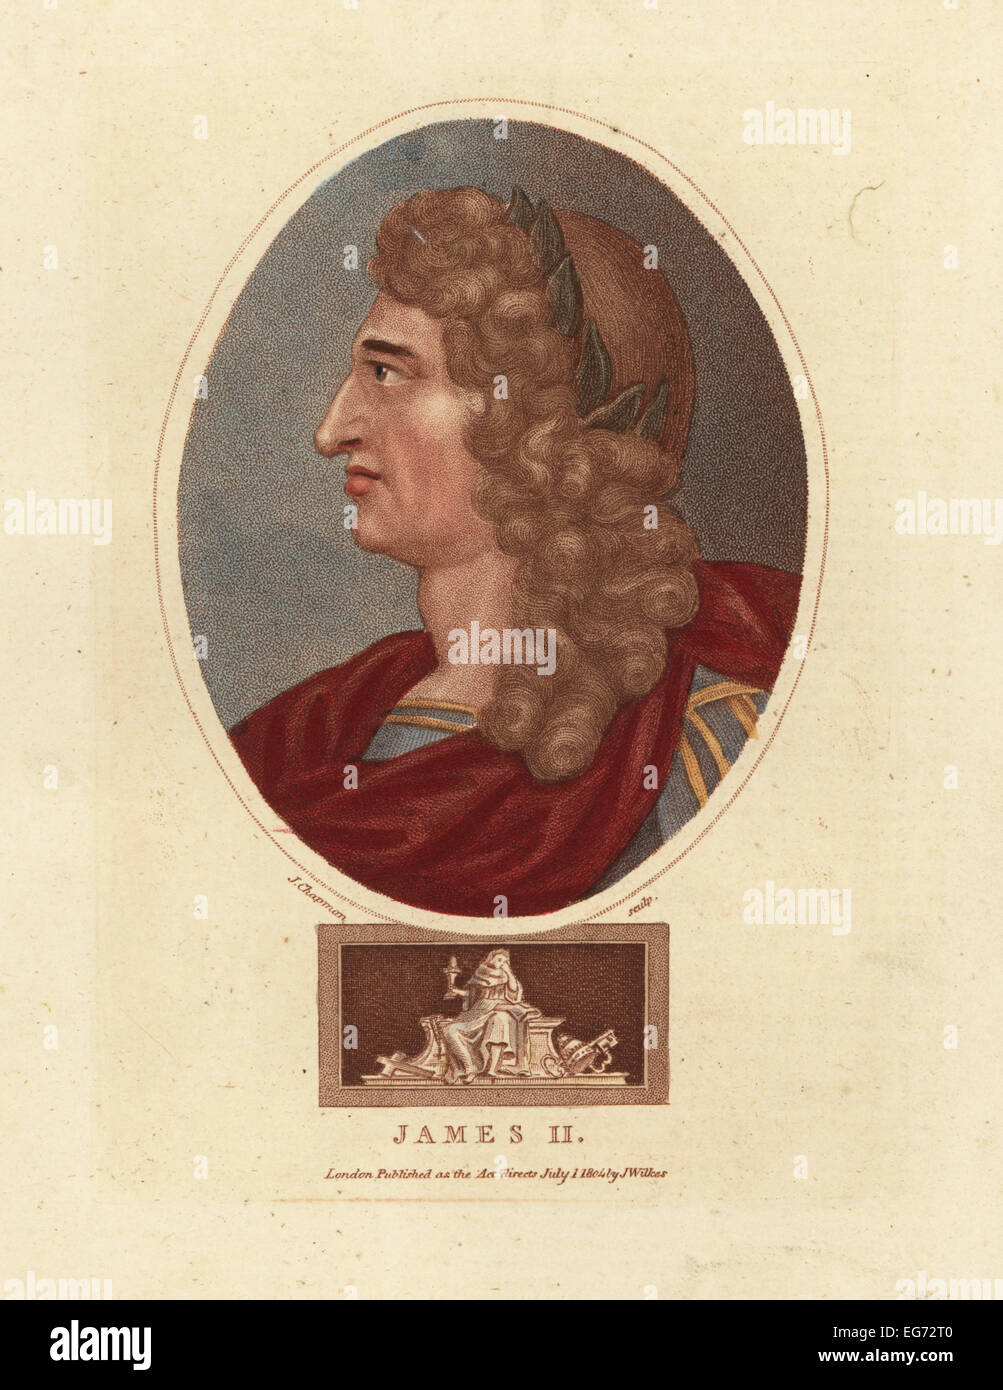 Portrait of King James II (1633-1701), King of England and Scotland. Stock Photo